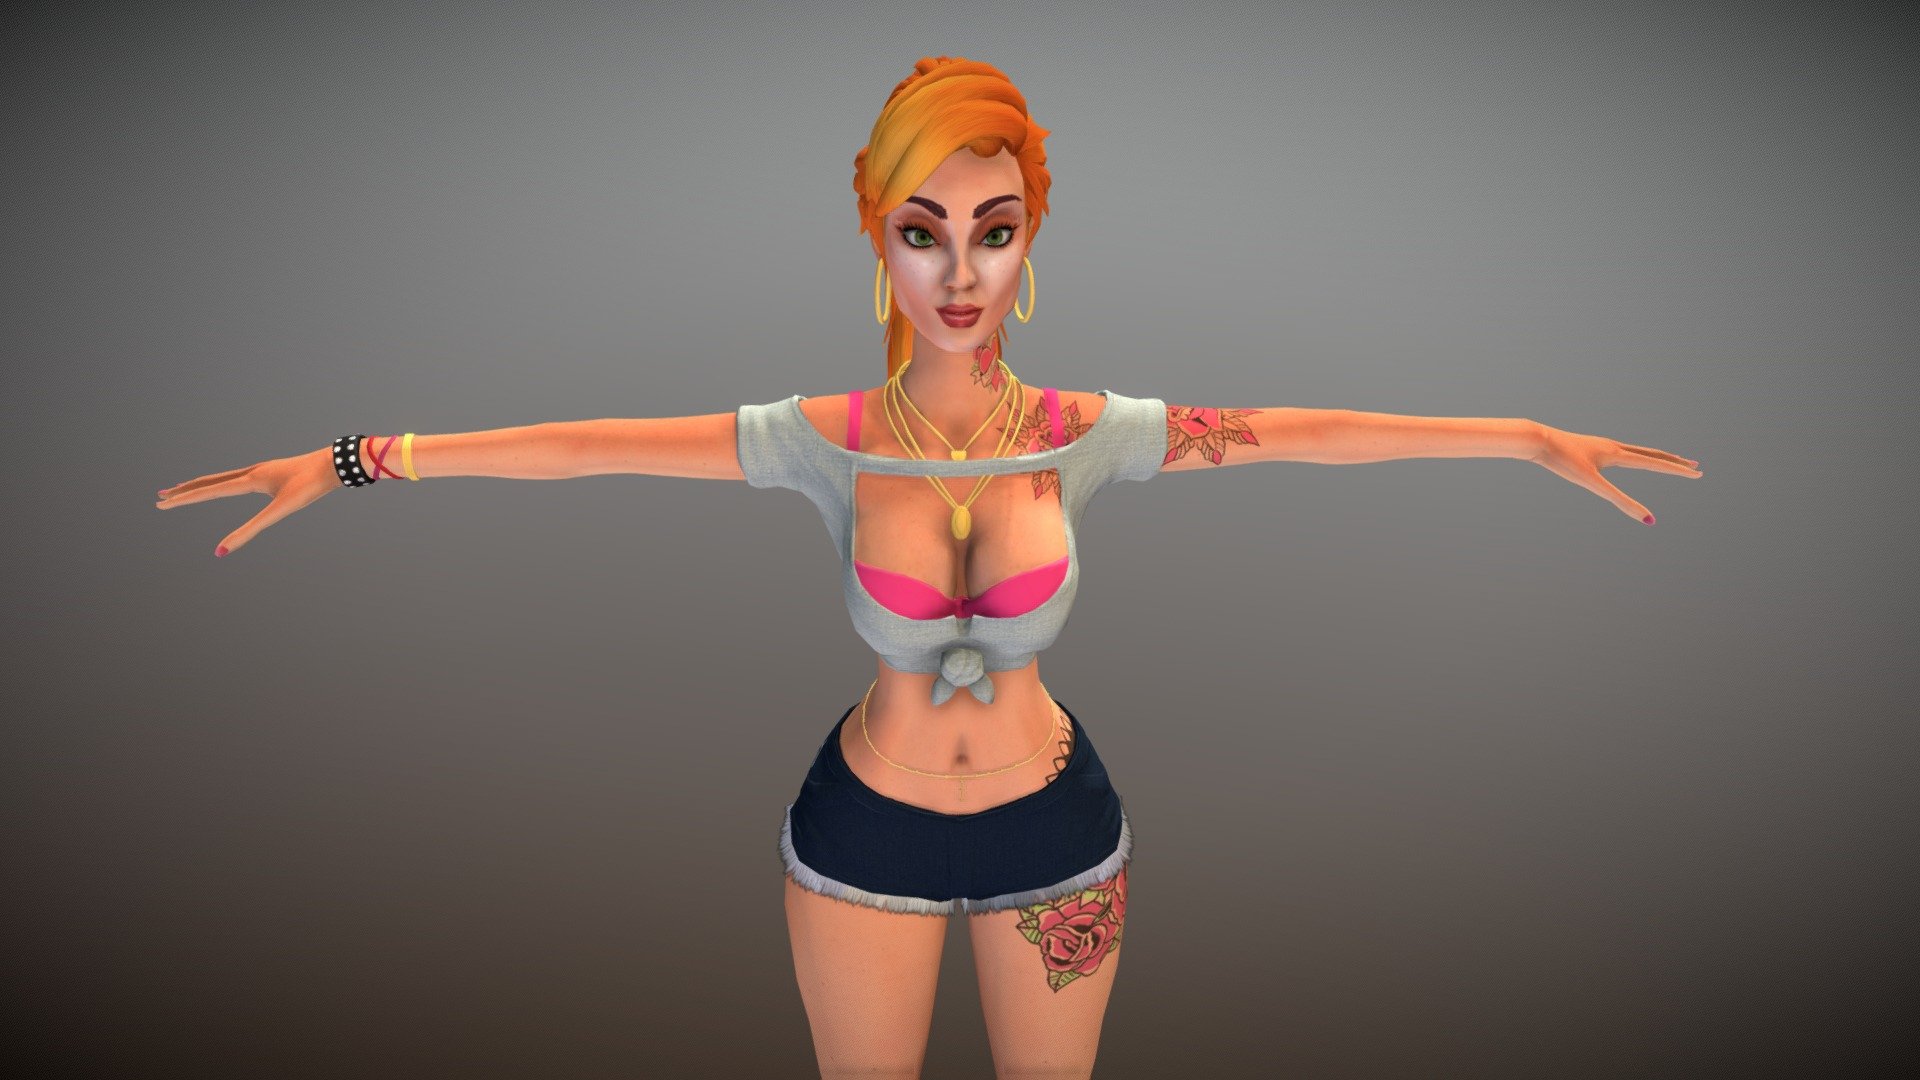 Red Hot Girl - 3D model by Appfox 3d model